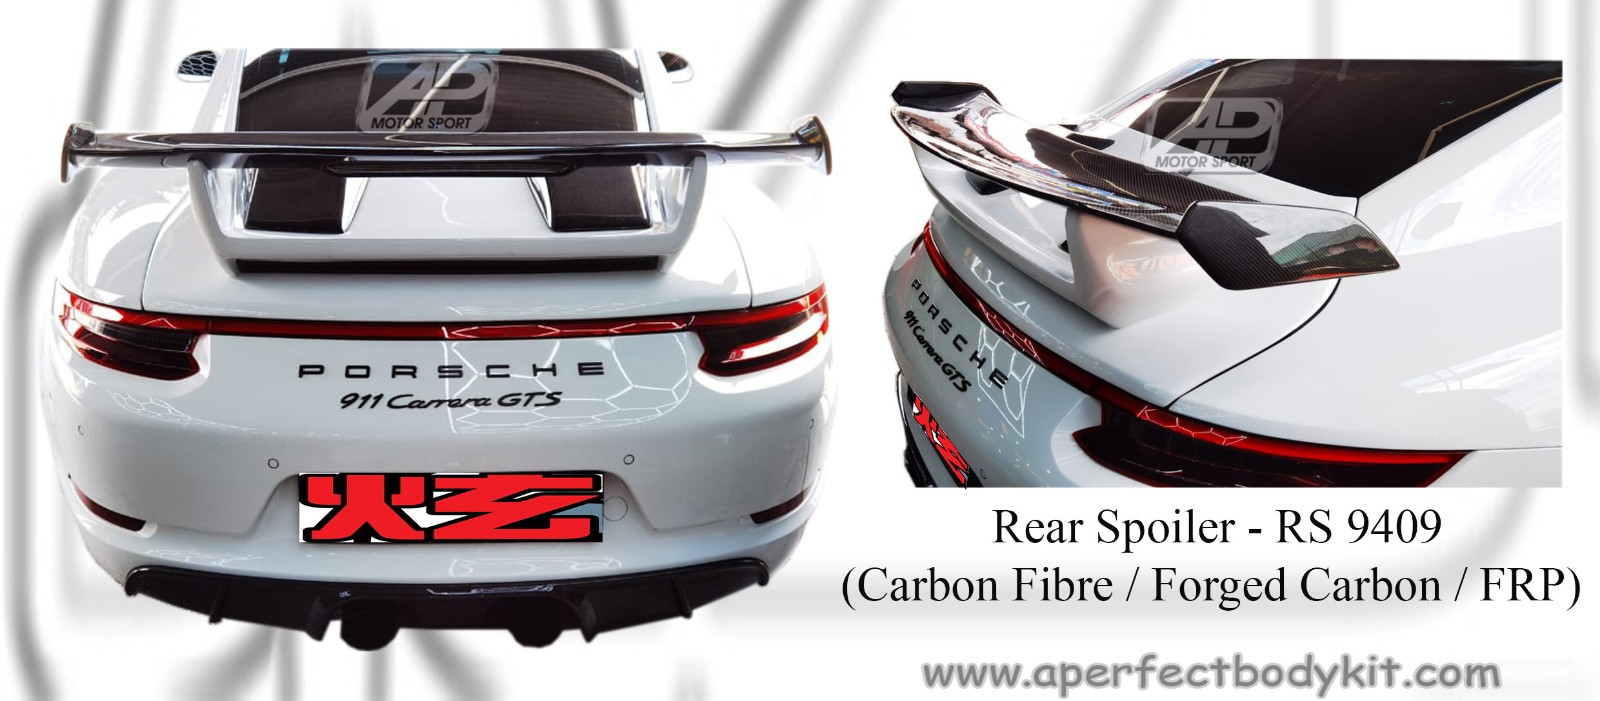 Porsche Carerra 911 Rear Spoiler (Carbon Fibre / Forged Carb